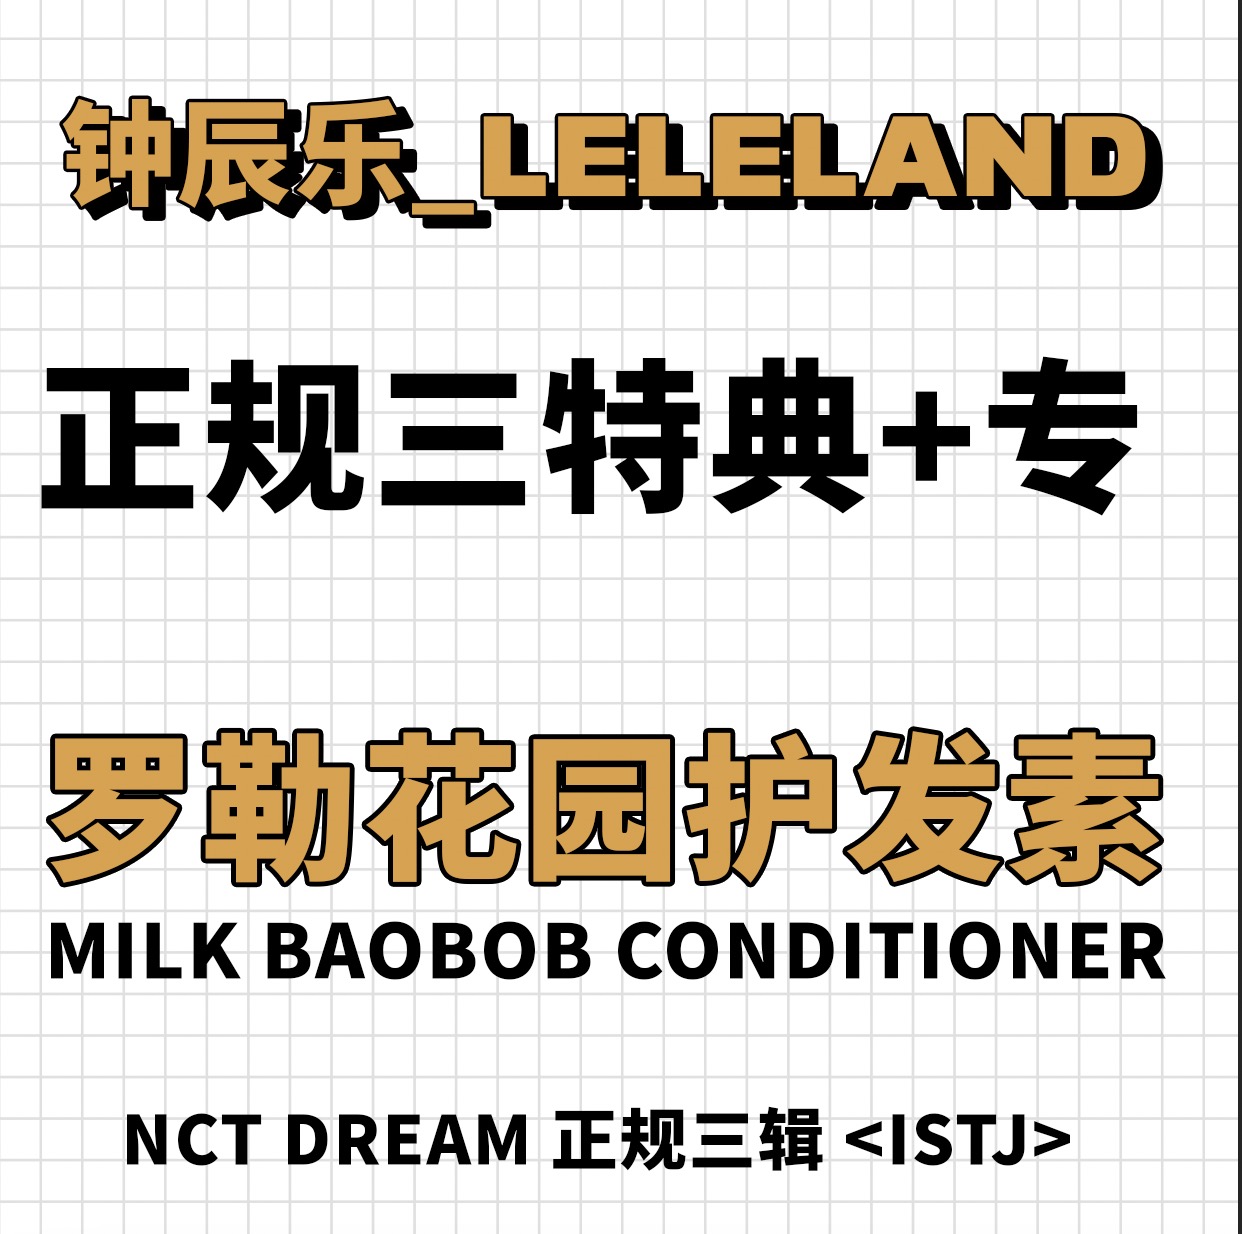 [全款 护发素特典专] NCT DREAM - 正规3辑 [ISTJ]_钟辰乐吧_ChenLeBar